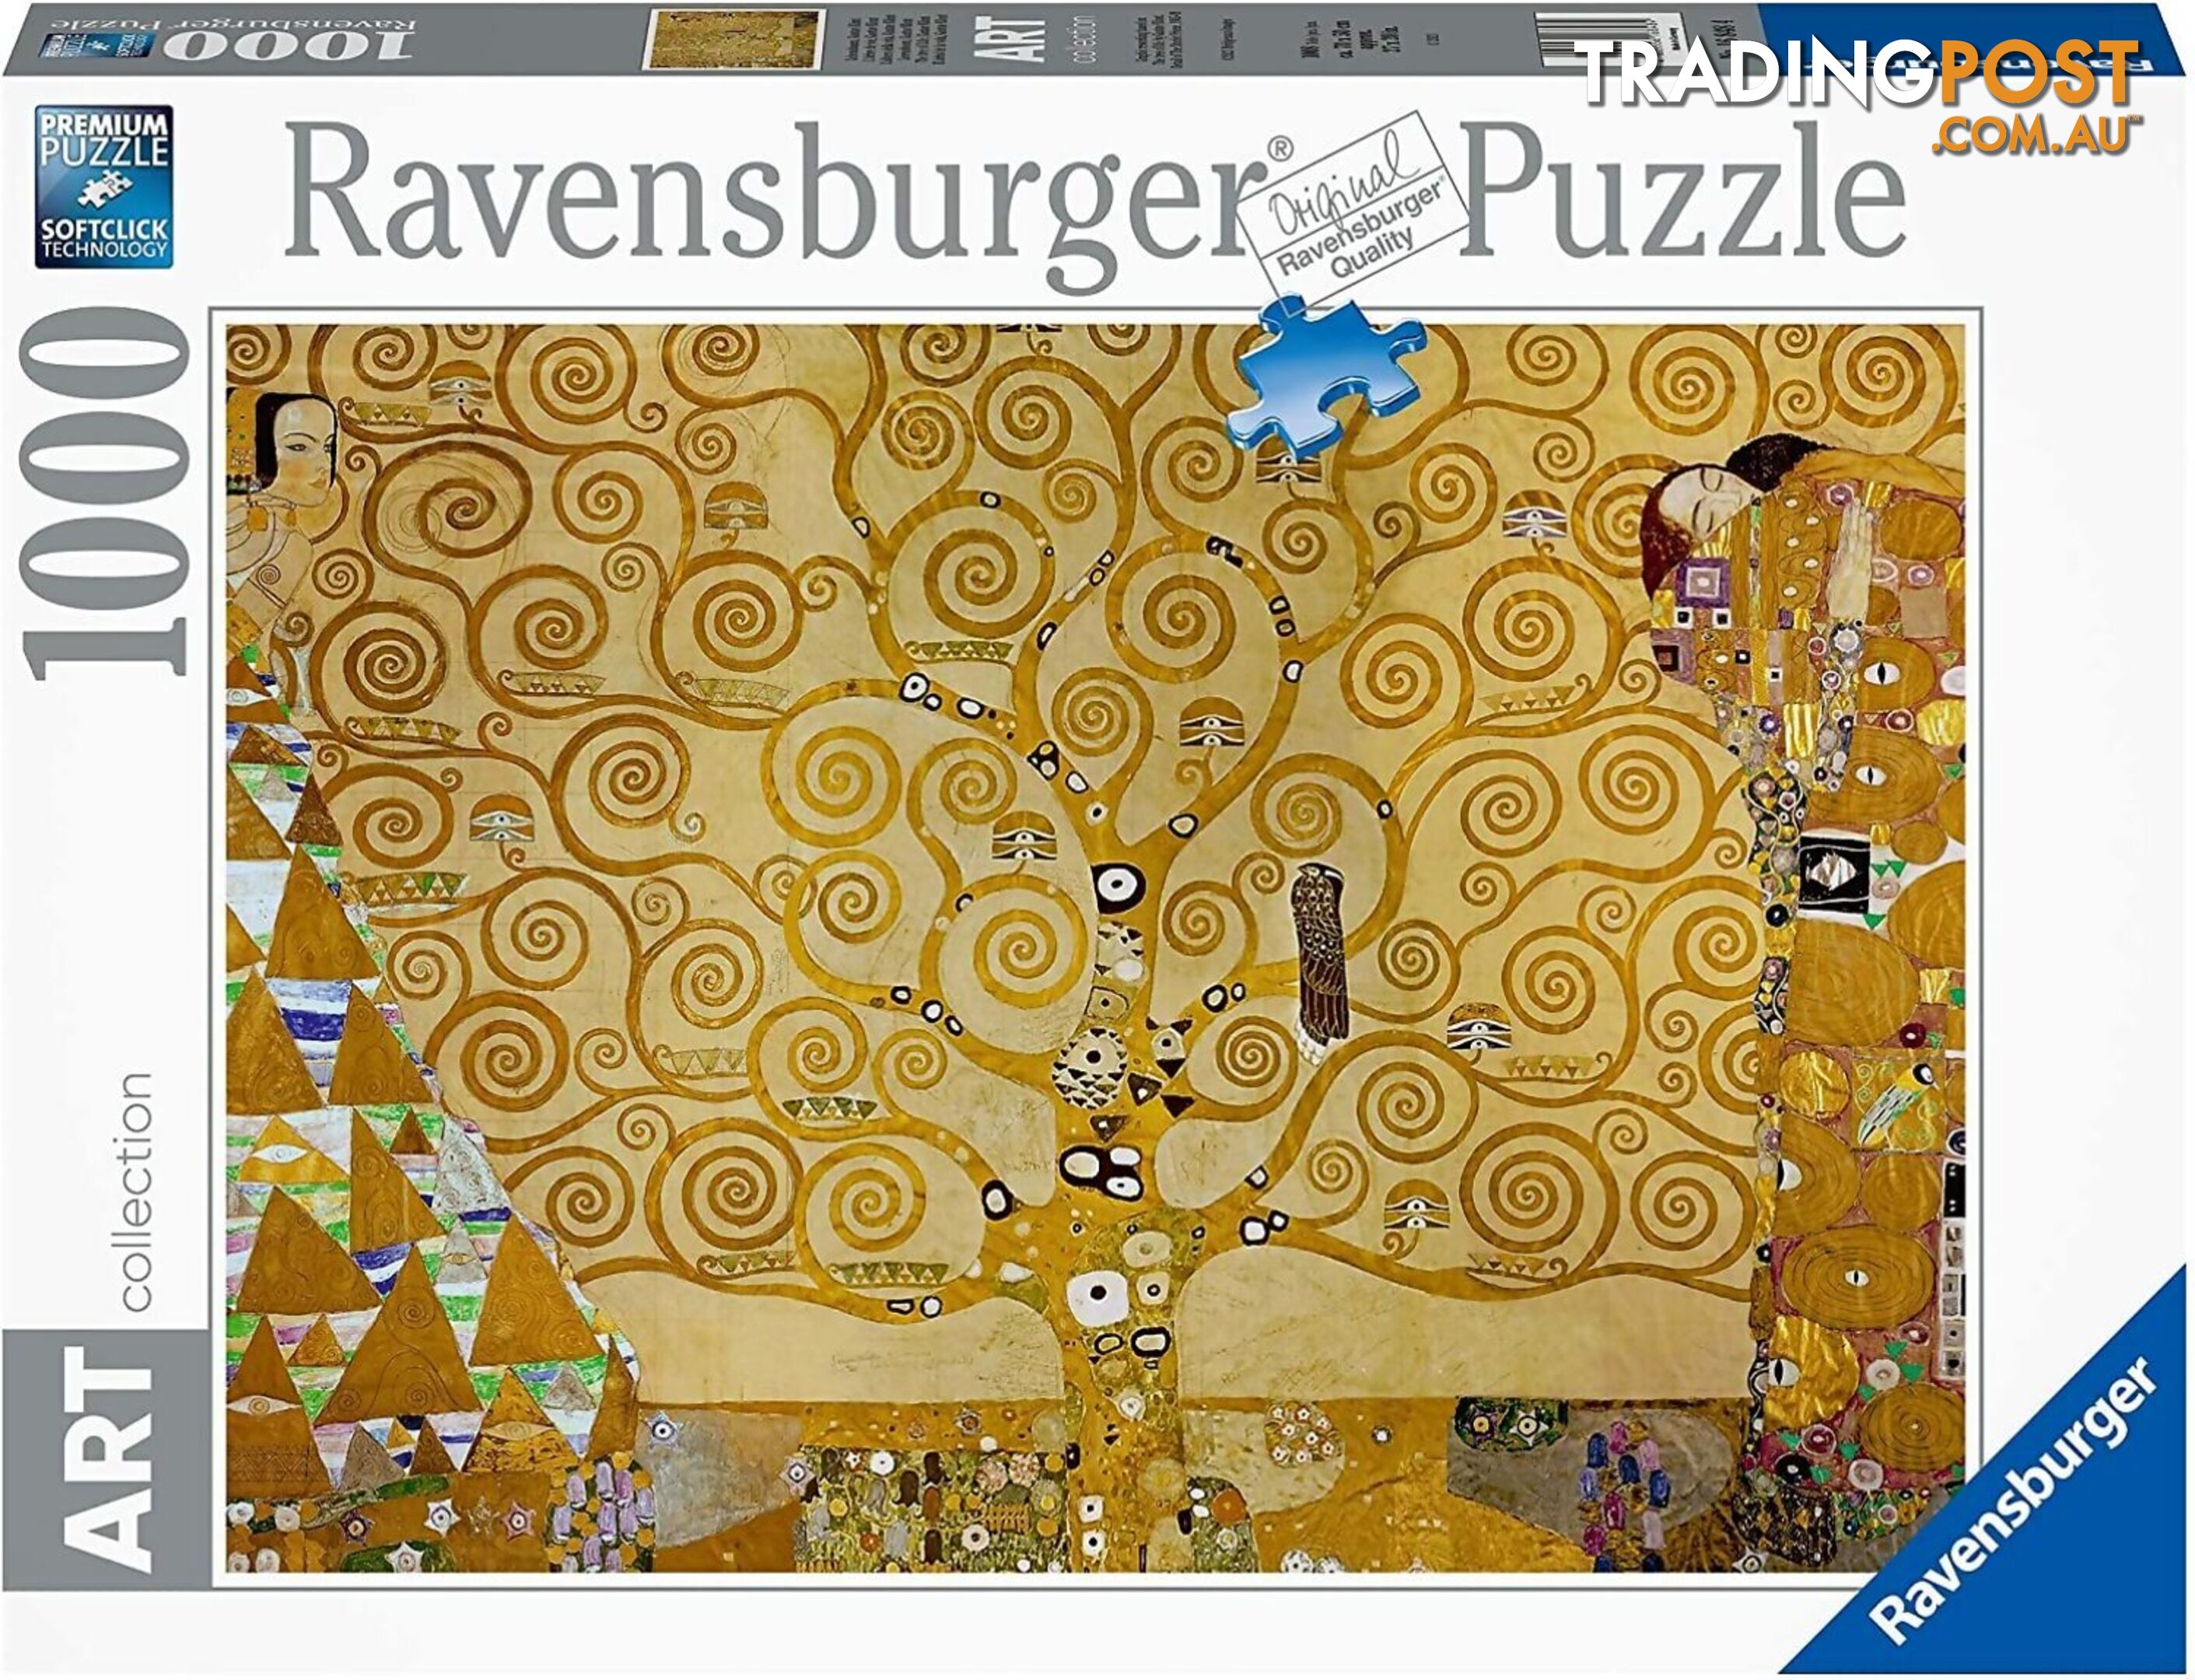 Ravensburger - Gustav Klimt The Tree Of Life Jigsaw Puzzle 1000pc - Mdrb16848 - 4005556168484